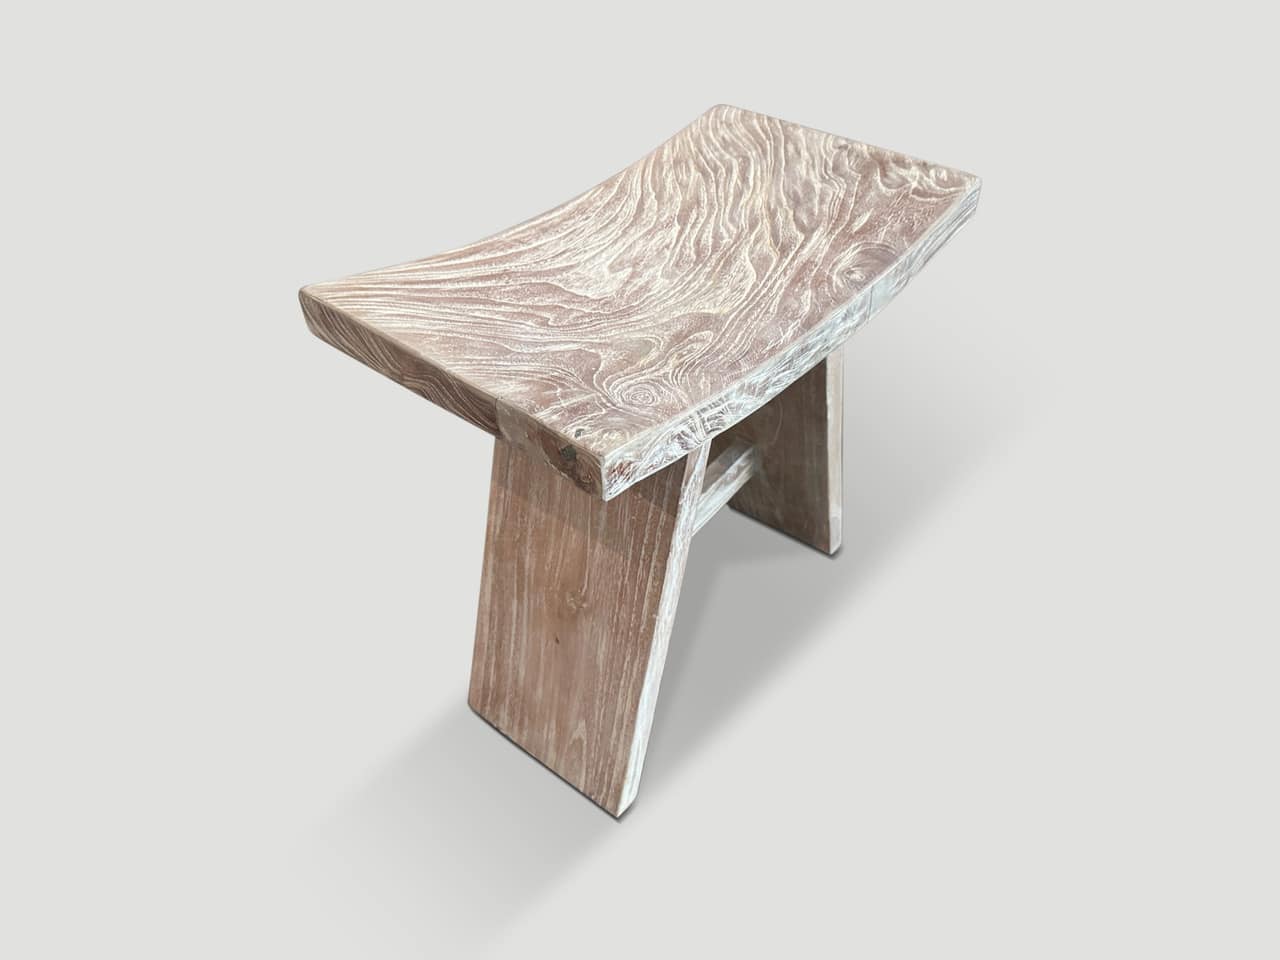 sleek minimalist bench or stool